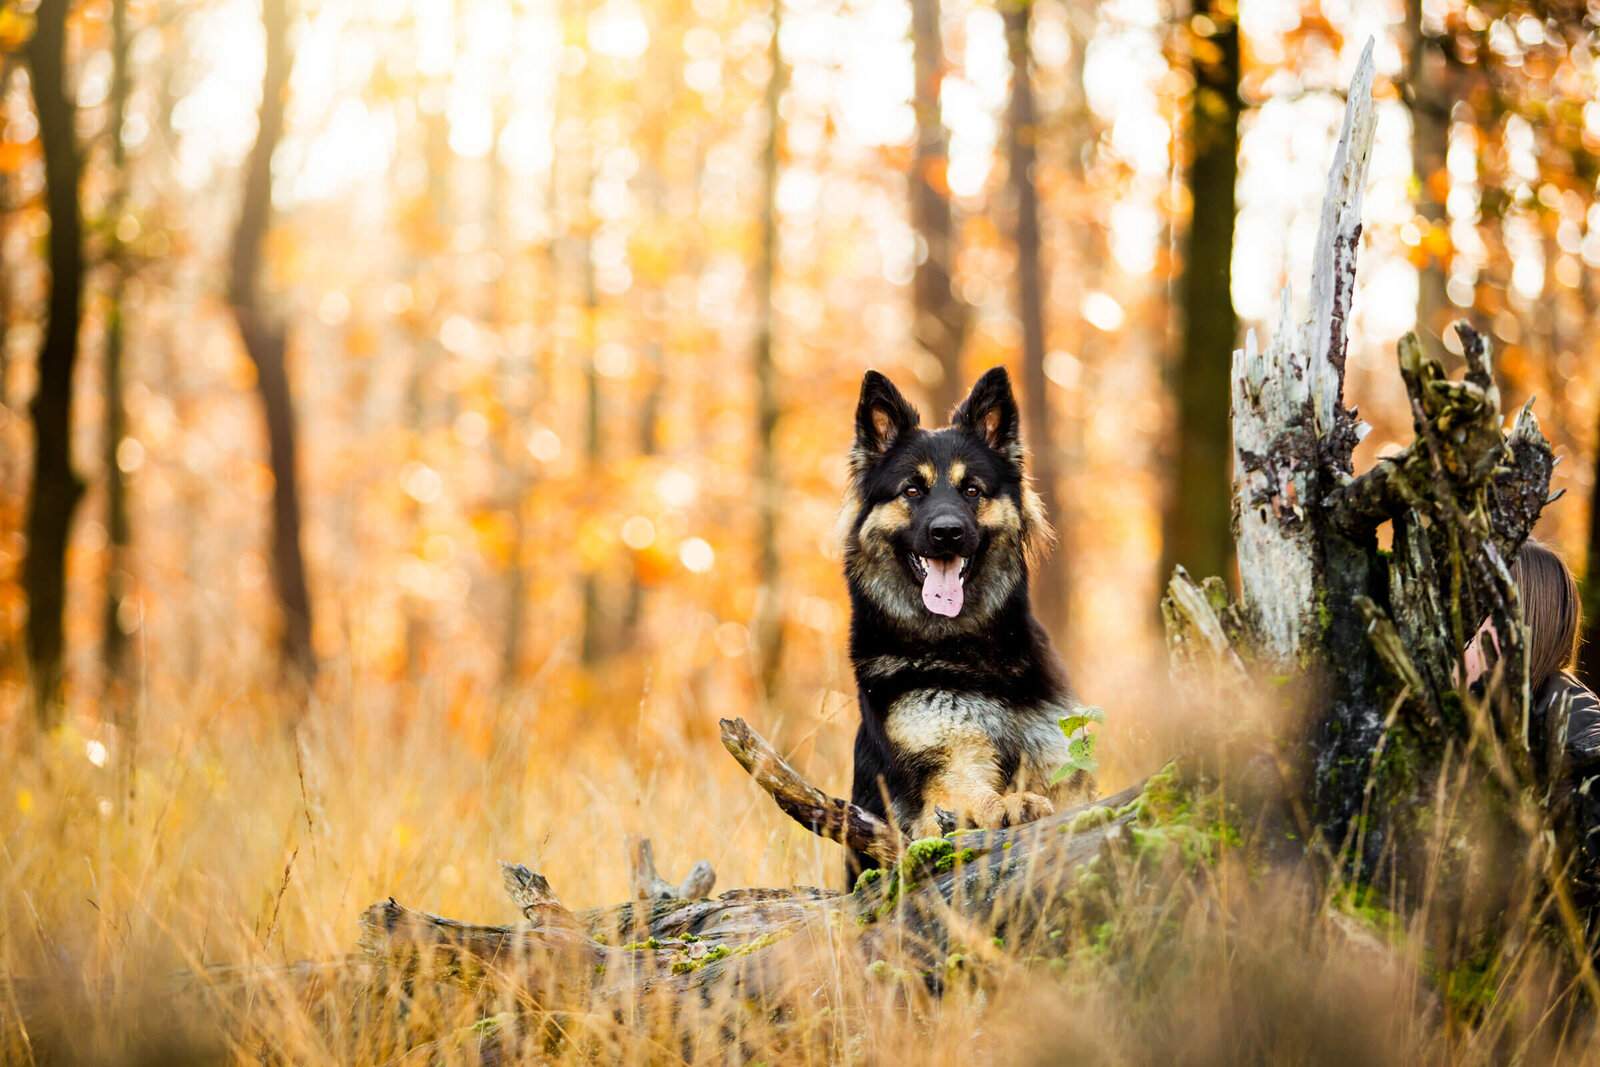 030-20151101-Pretty-Paws-honden-fotografie-Noord-Brabant-bossen-Hollandse-Herder-HR